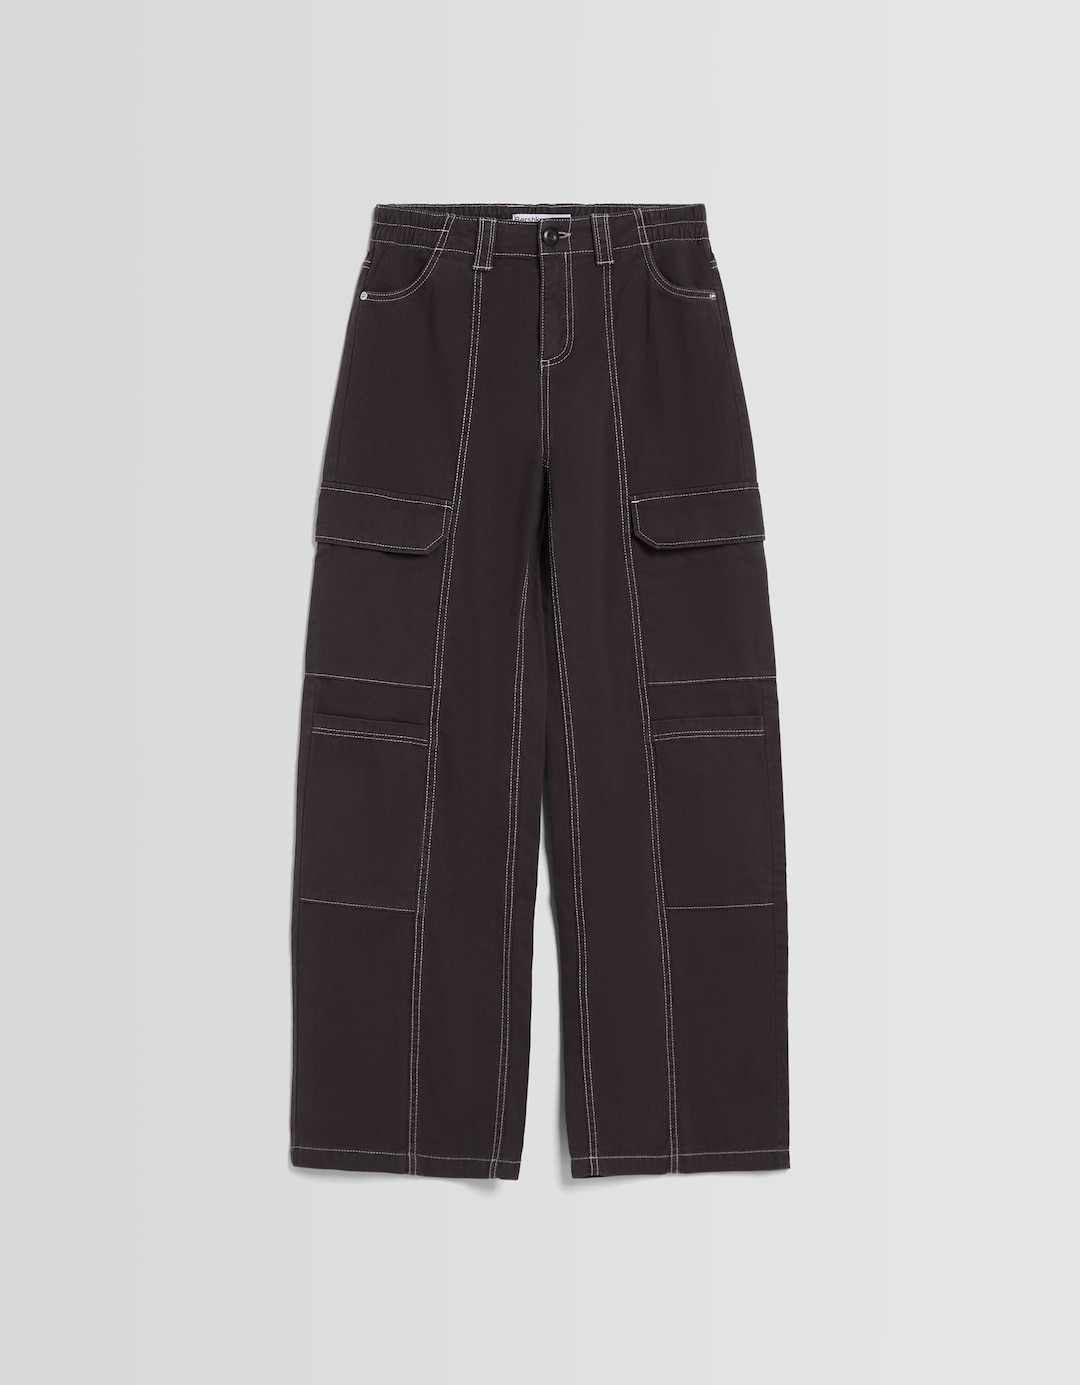 Pantalon cargo taille basse coton fil contraste